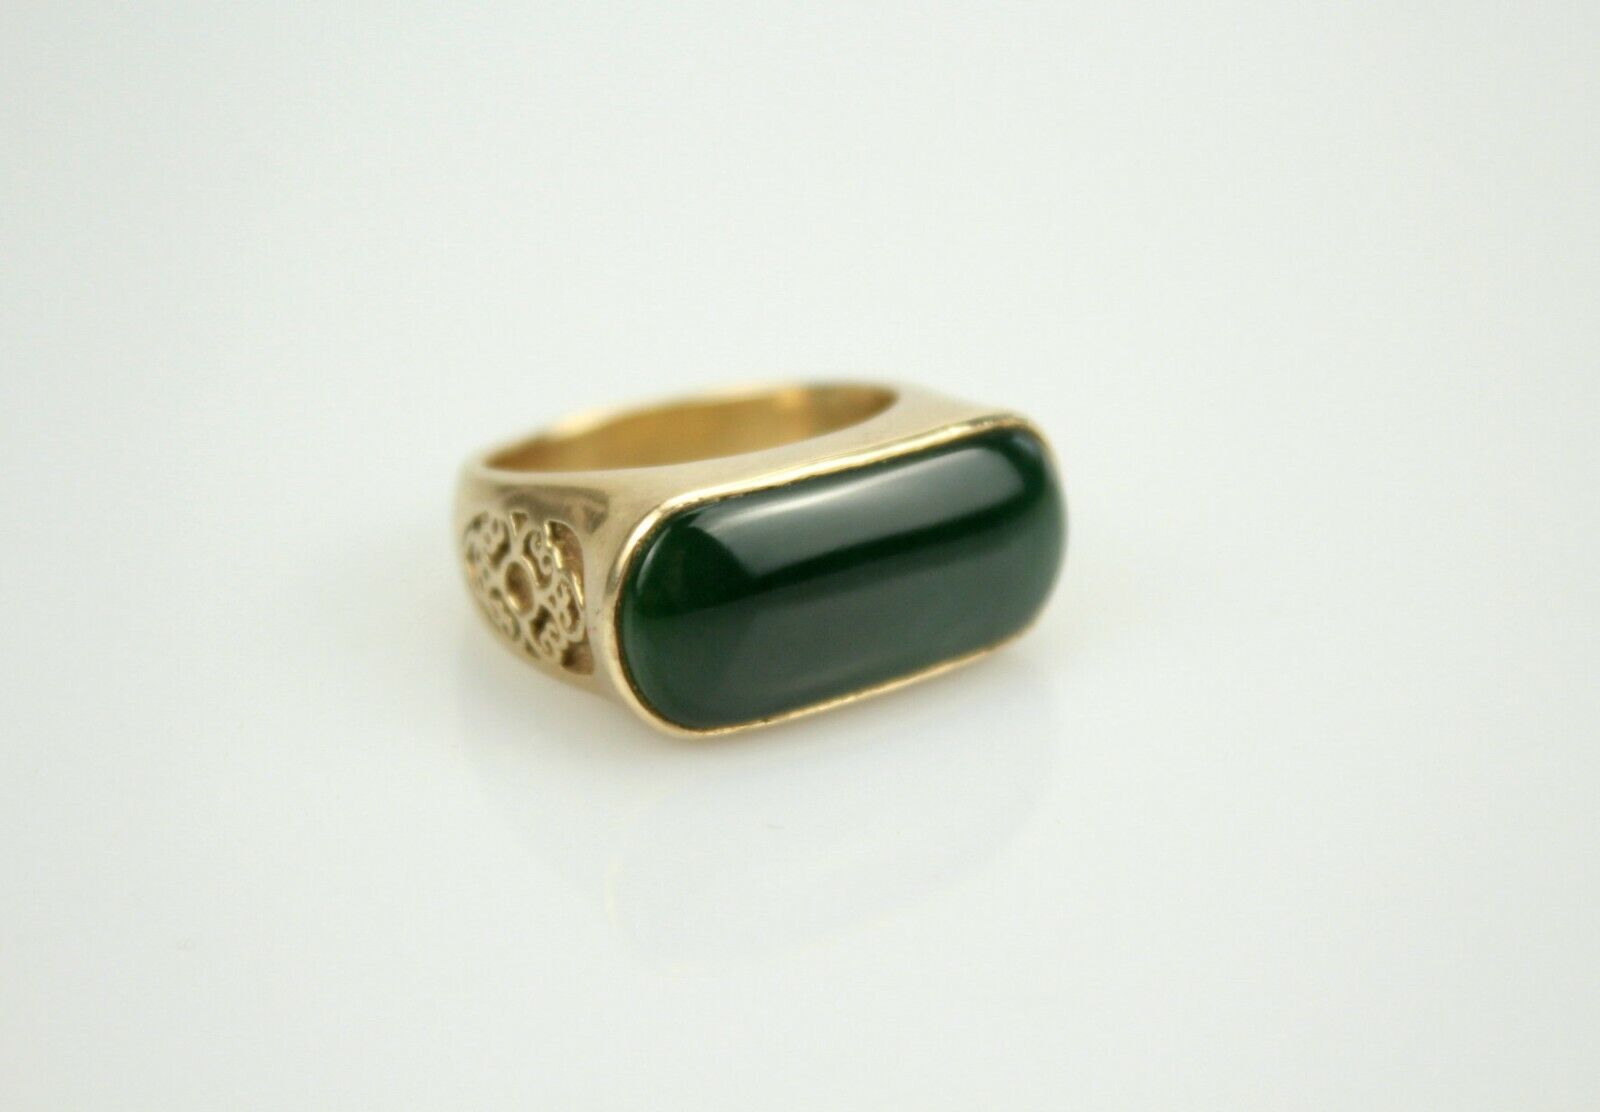 2.2 Cm China Jade Ring Natural Green Jade Ring 24k Gold Jewelry